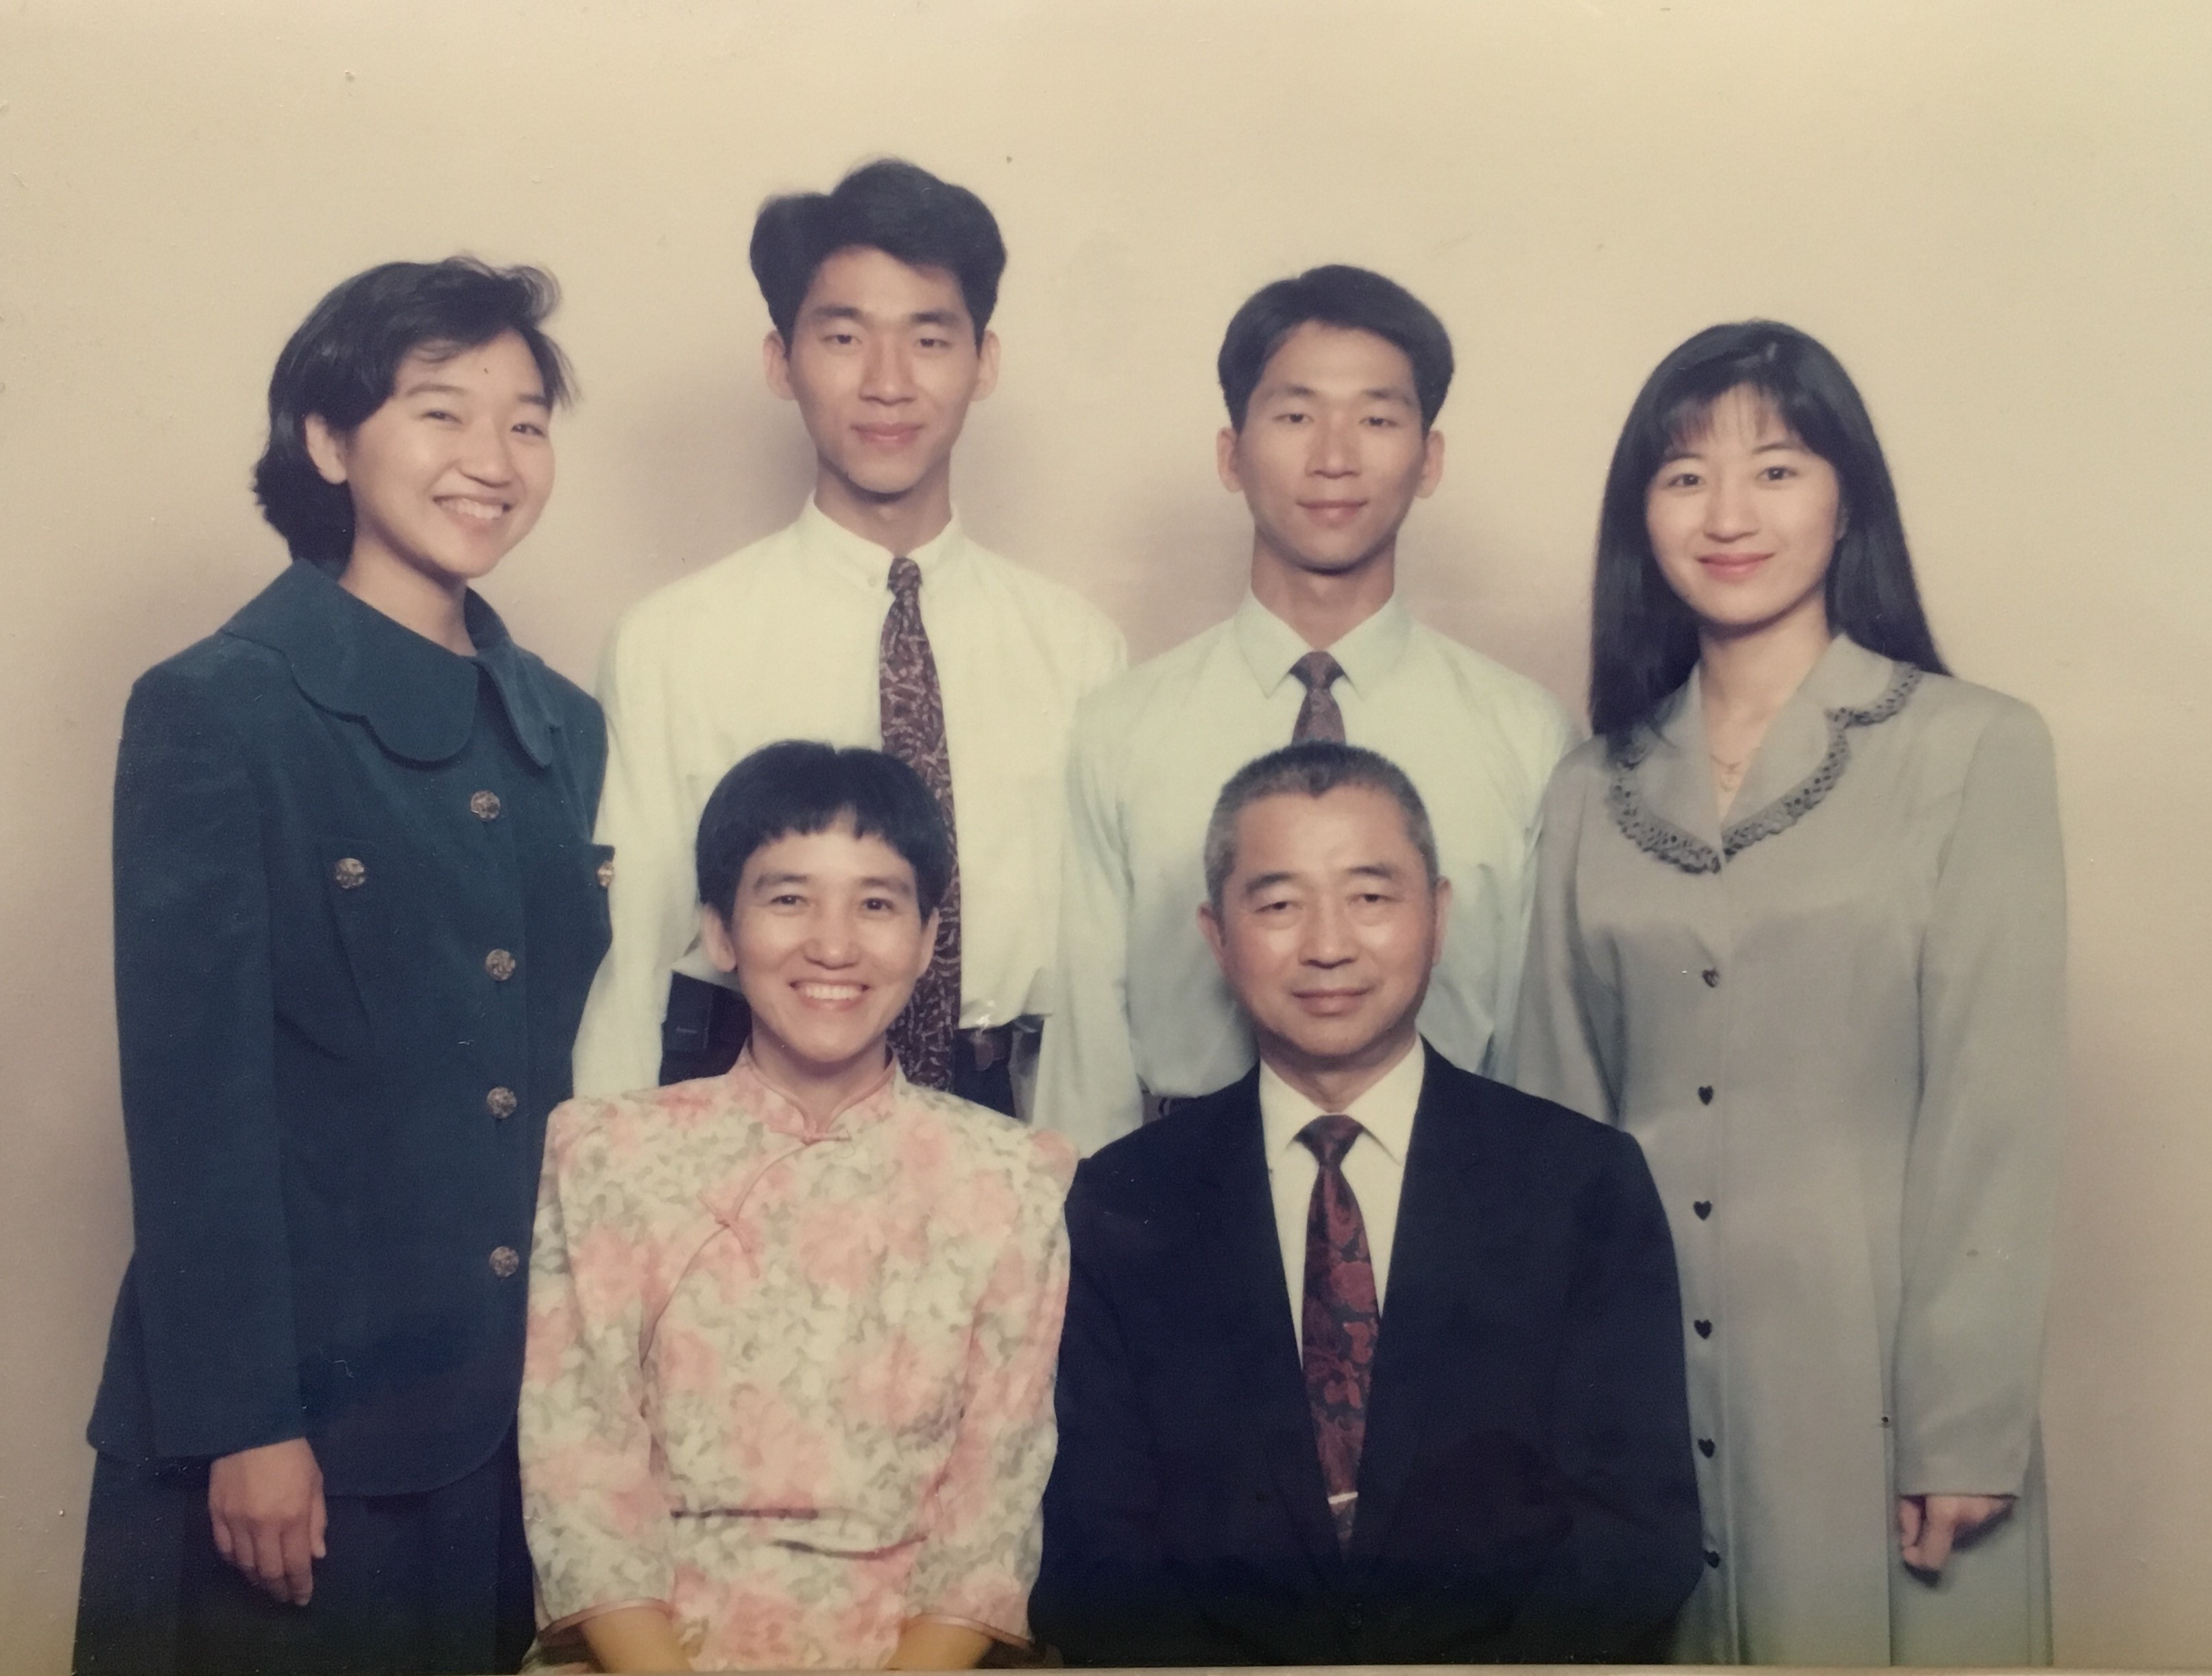 Wang Family Photo